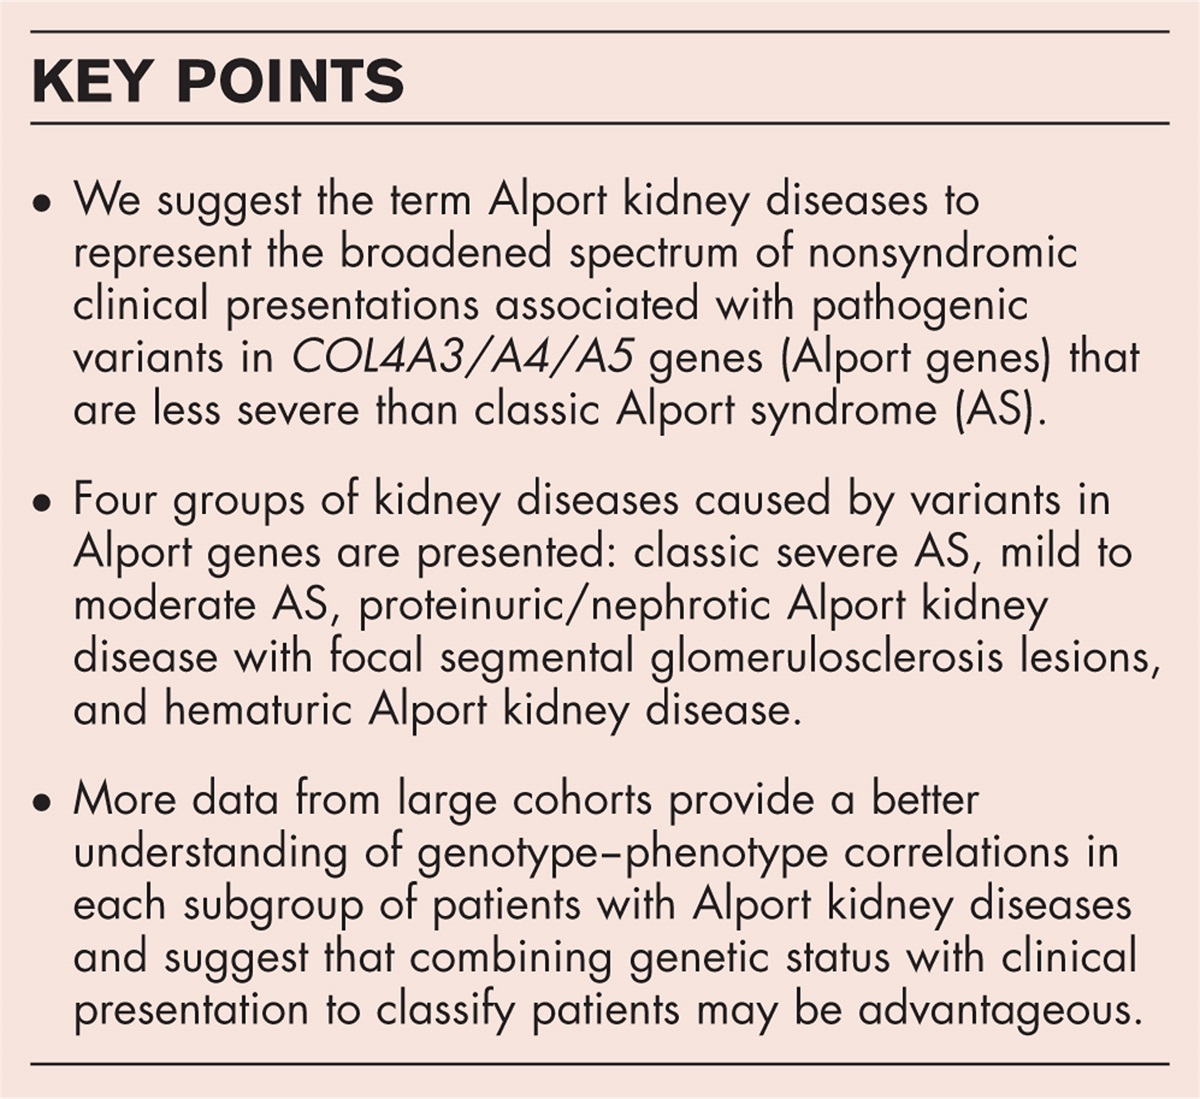 Alport syndrome and Alport kidney diseases – elucidating the disease spectrum